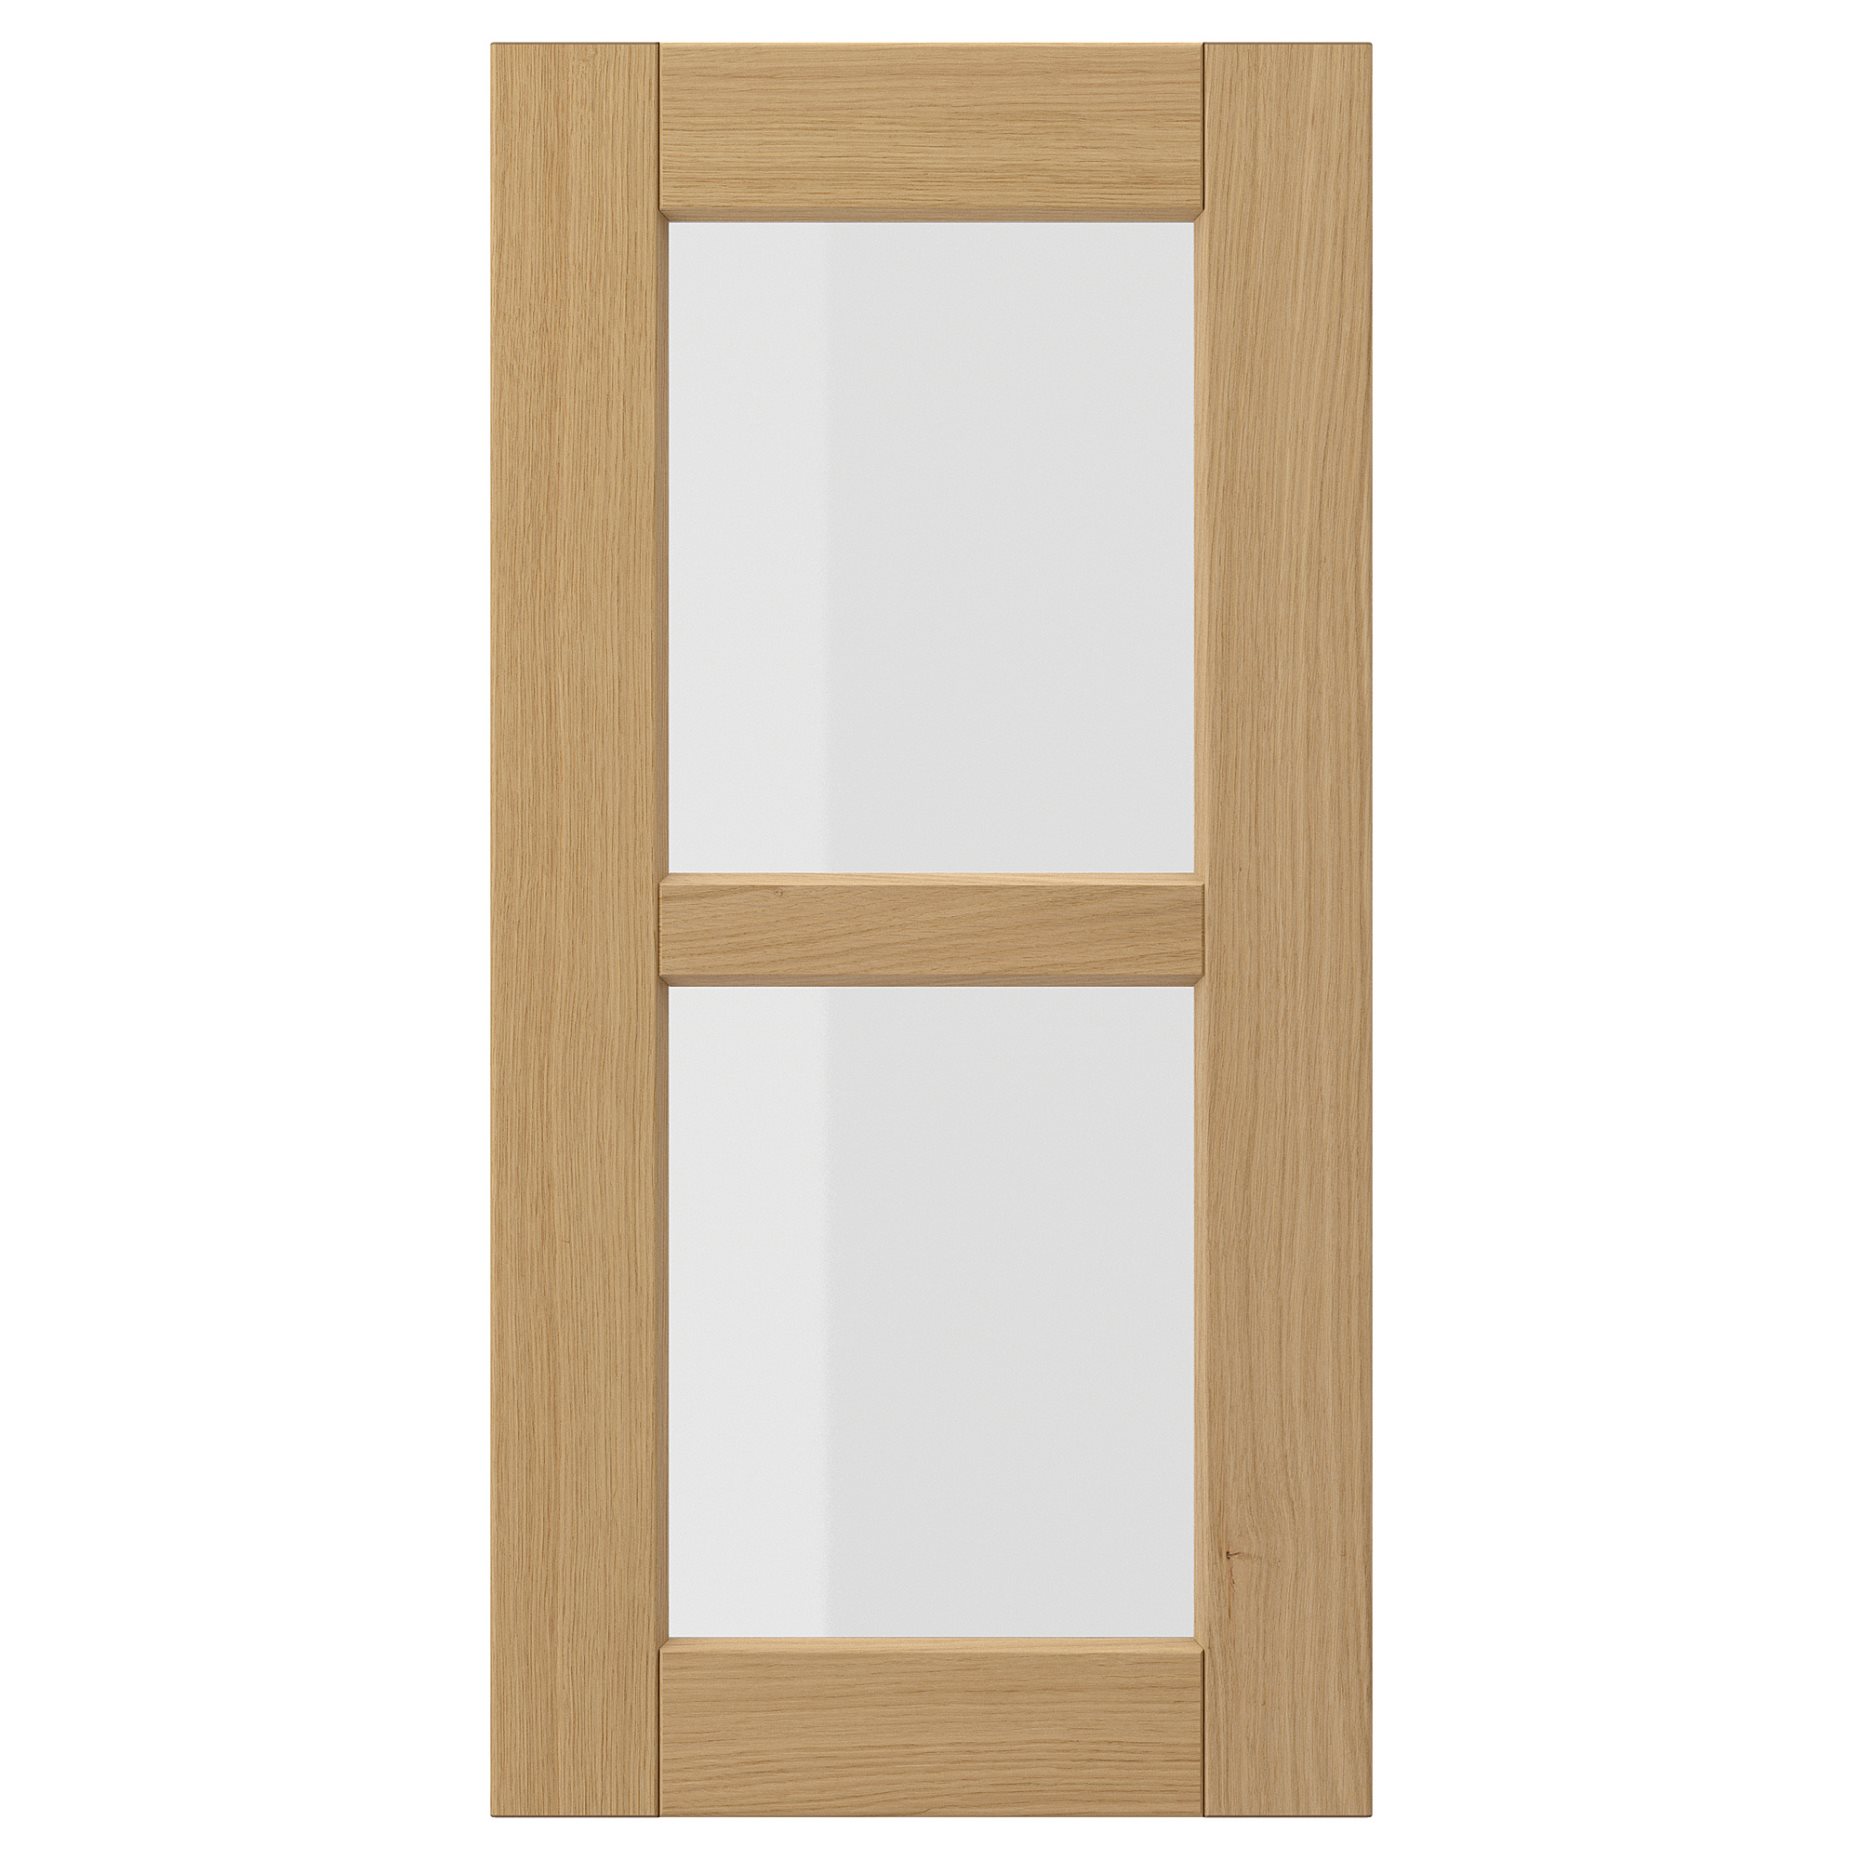 FORSBACKA, γυάλινη πόρτα, 30x60 cm, 005.652.54